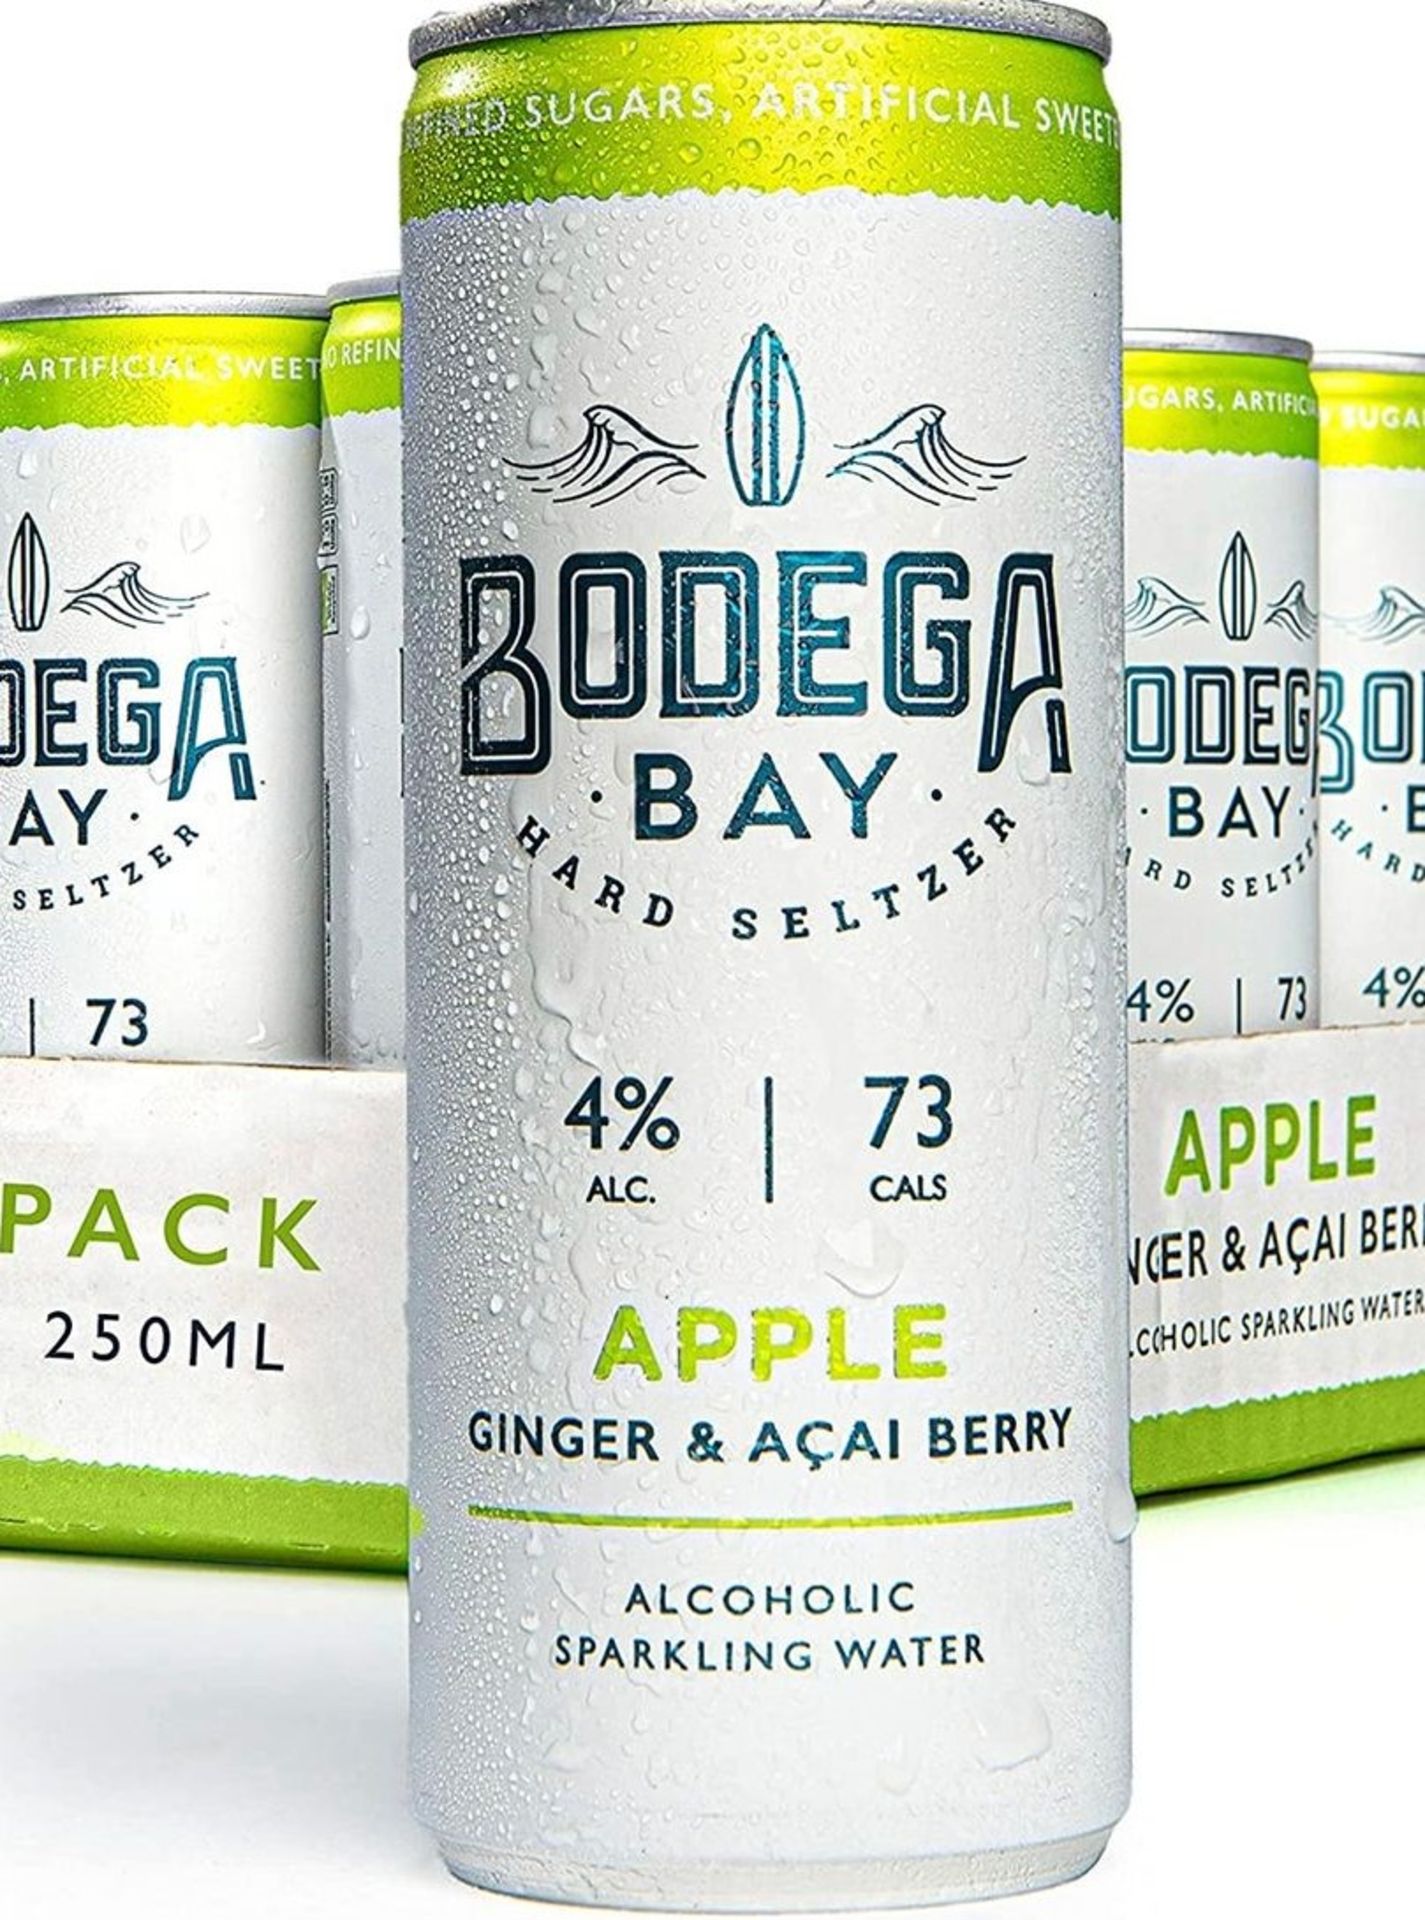 24 x Bodega Bay Hard Seltzer 250ml Alcoholic Sparkling Water Drinks - Apple Ginger & Acai Berry - Image 7 of 11